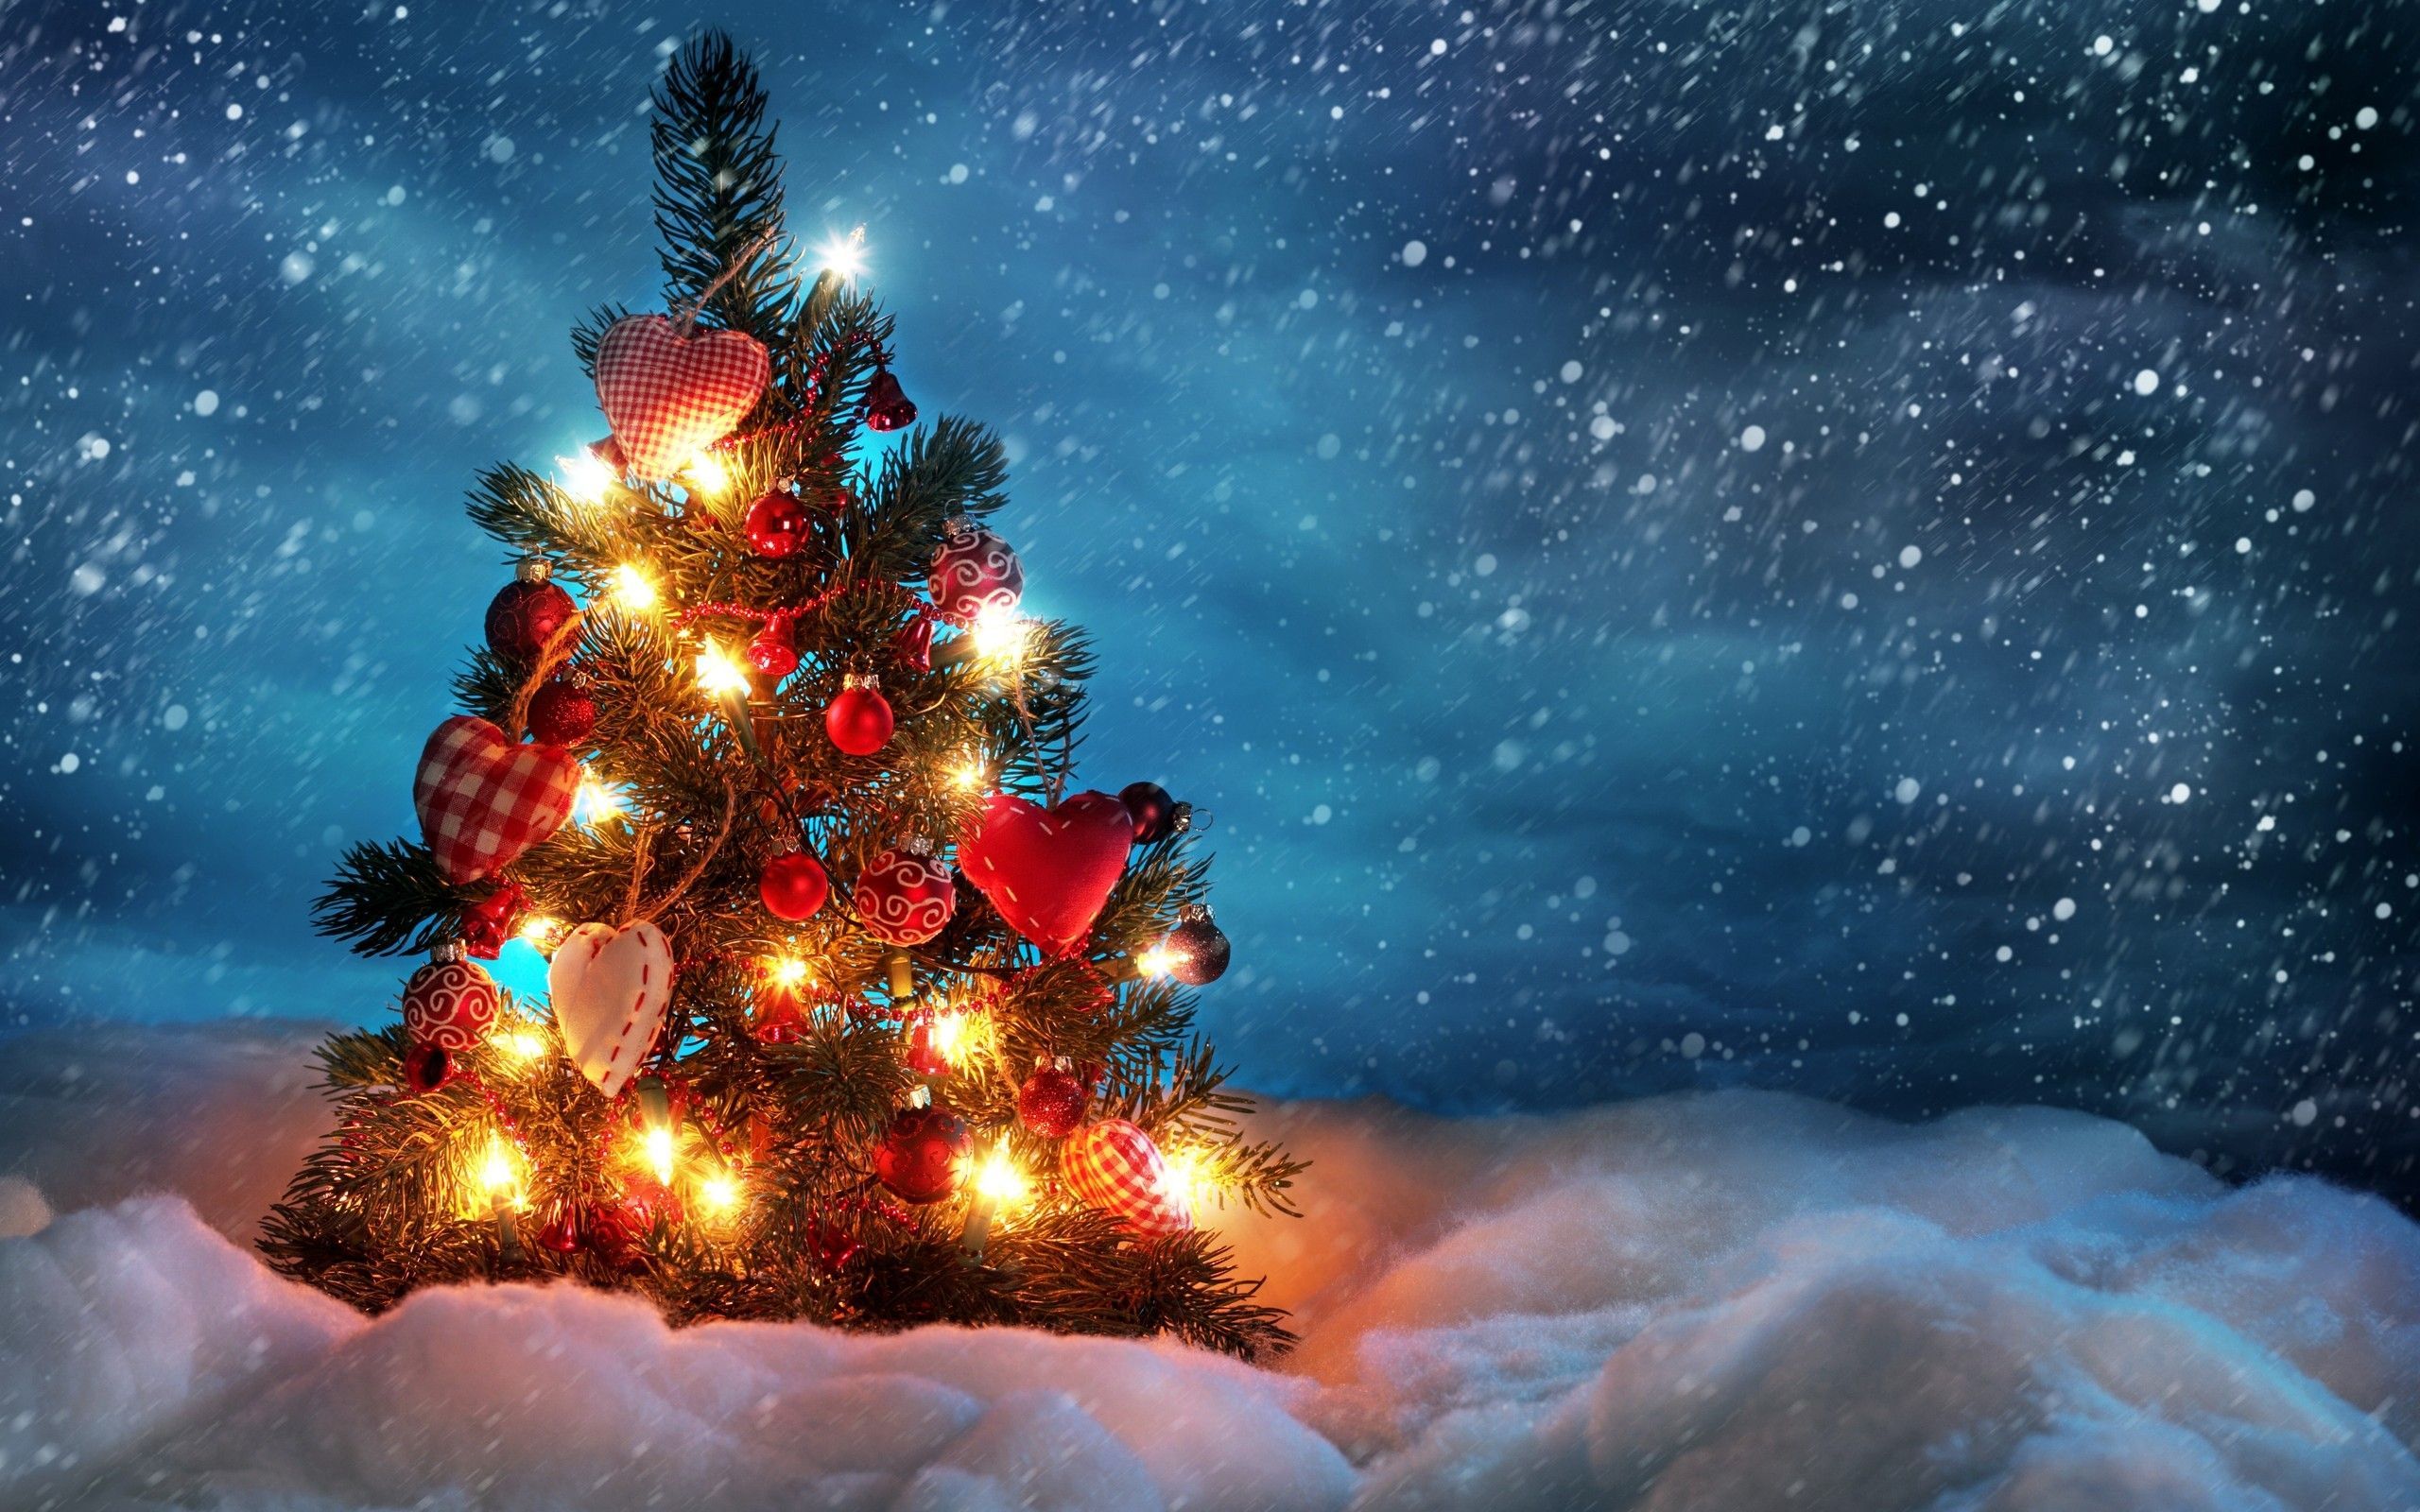 Christmas HD Wallpaper Free Download. Christmas desktop wallpaper, Christmas tree wallpaper, Cute christmas tree